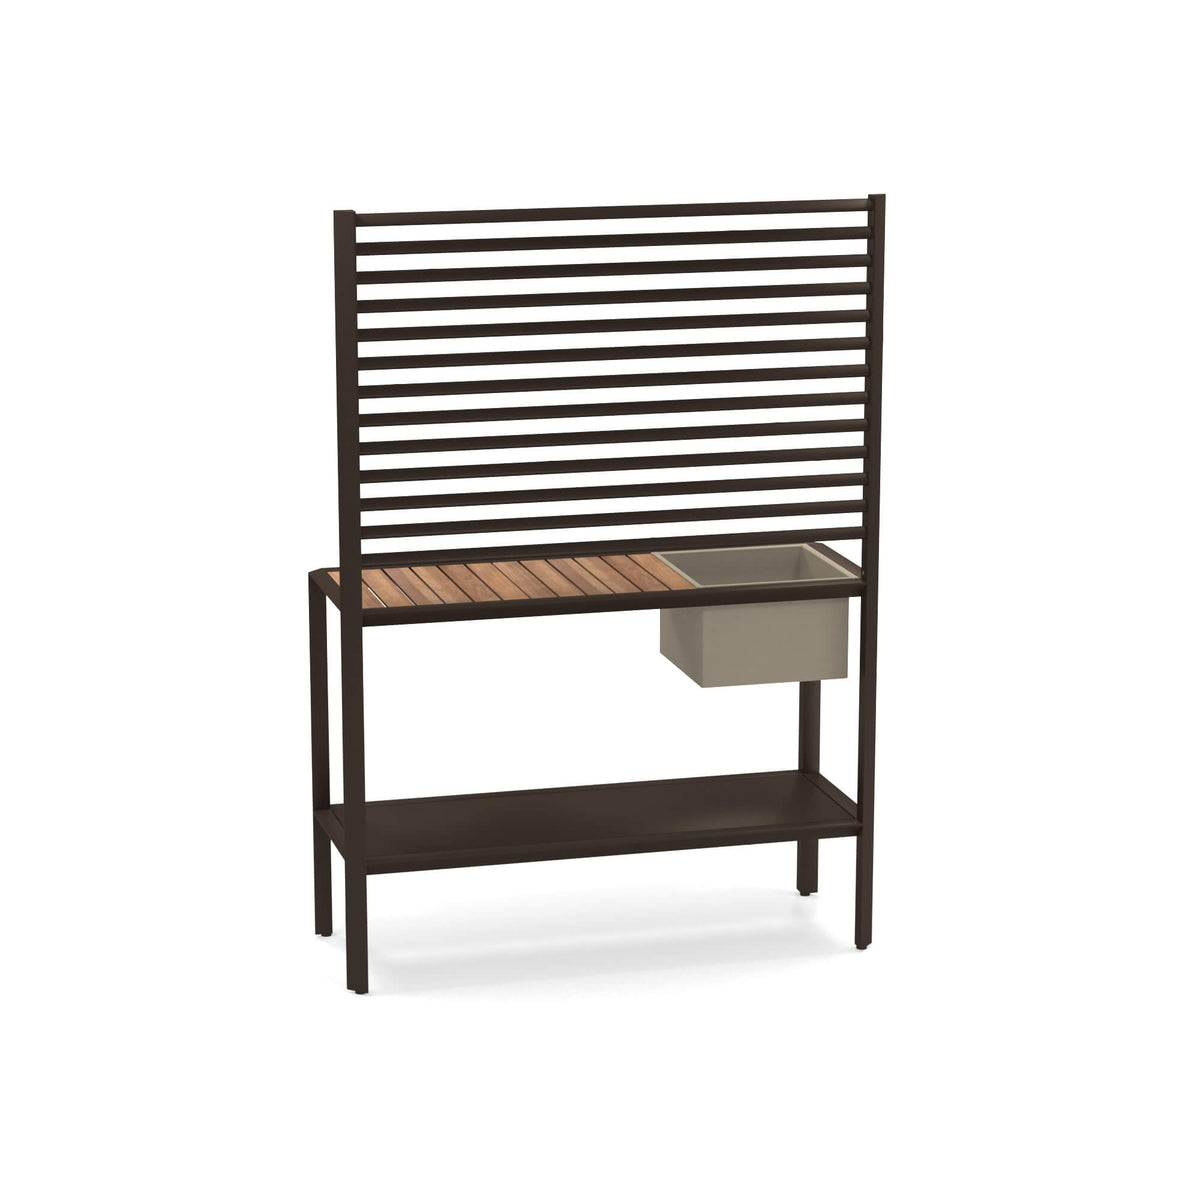 Camaleon Configuration 5 Sideboard-Emu-Contract Furniture Store